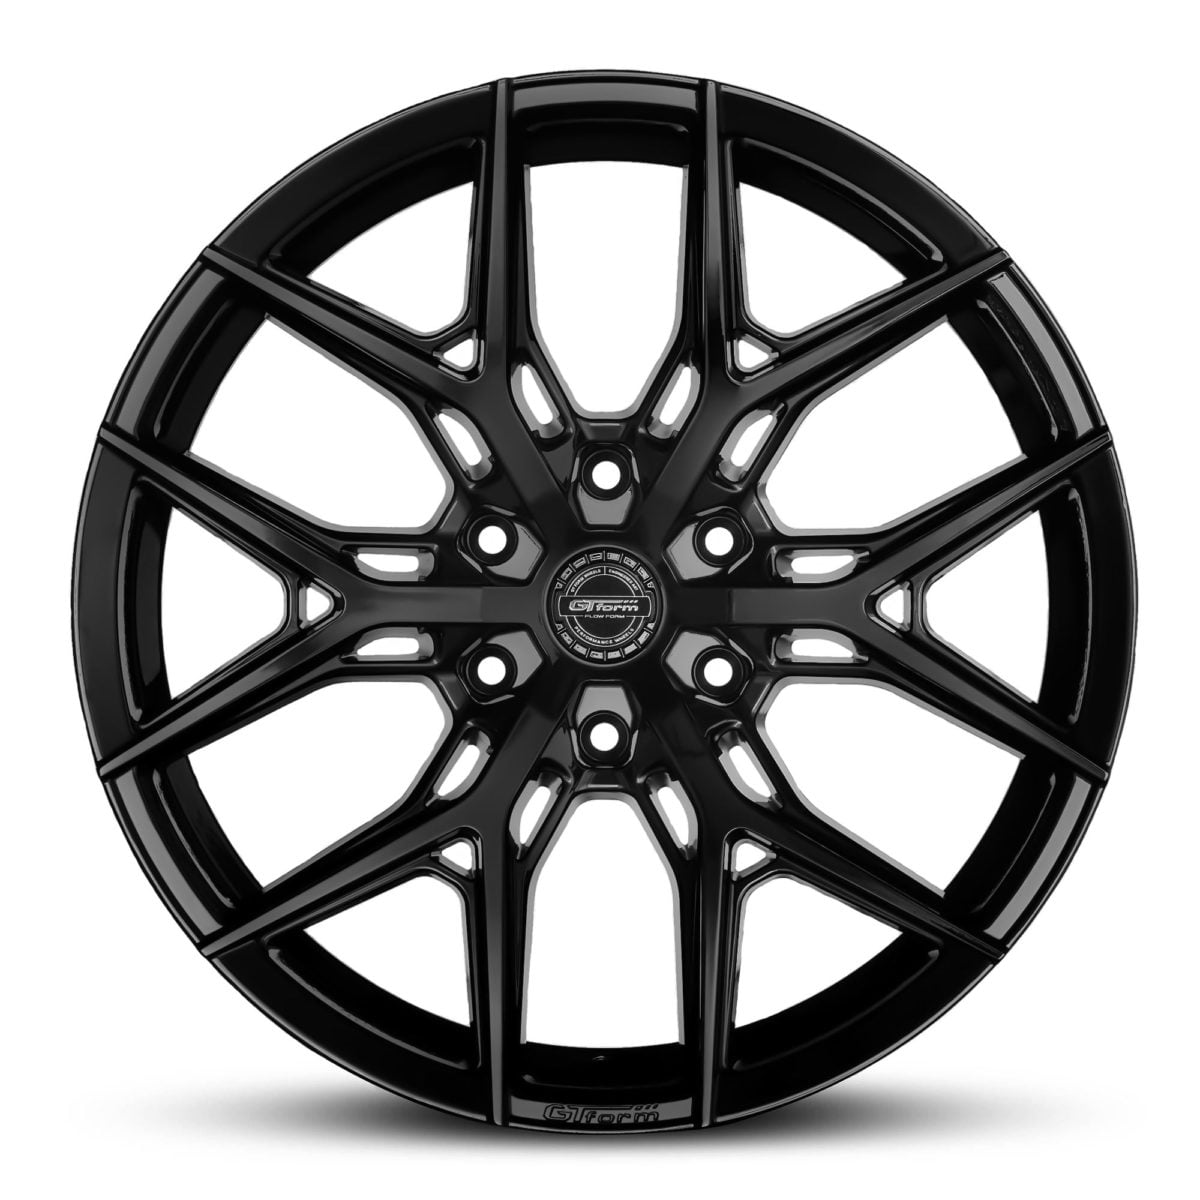 22 inch GT Form GF-S1 Satin Black Wheels 6x139.7 Rims